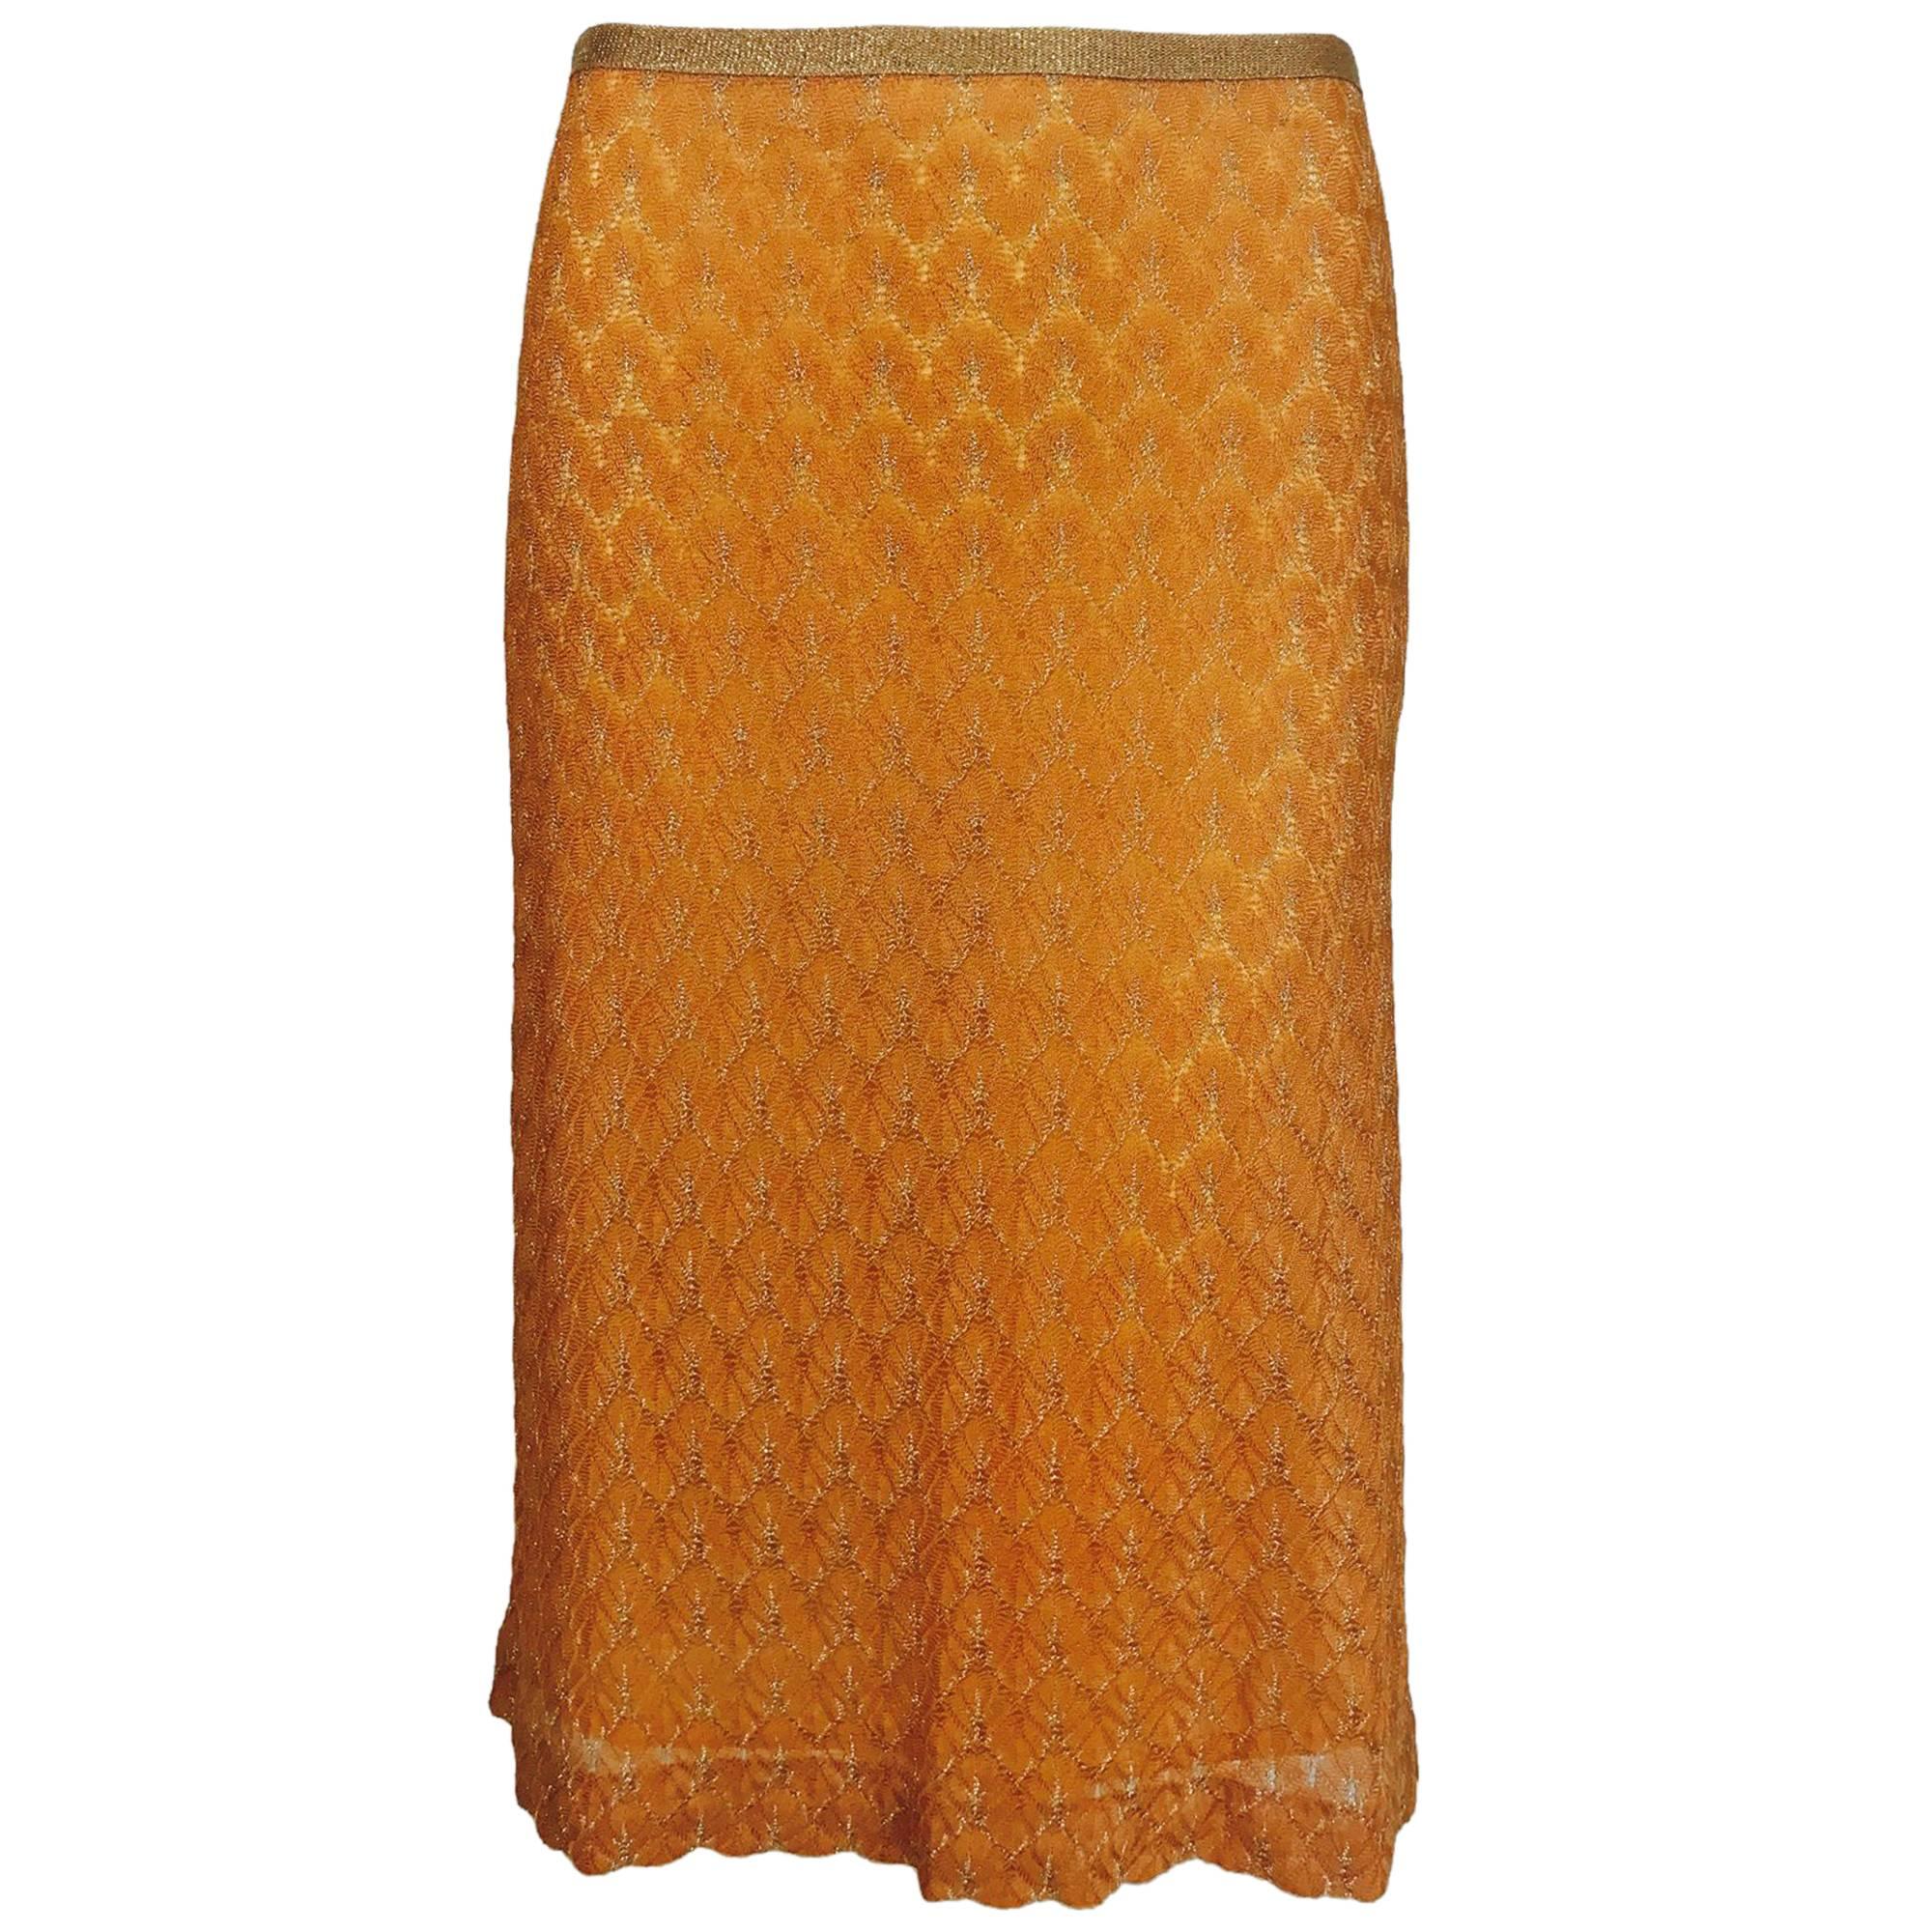 Missoni coral and gold metallic knit straight skirt unworn